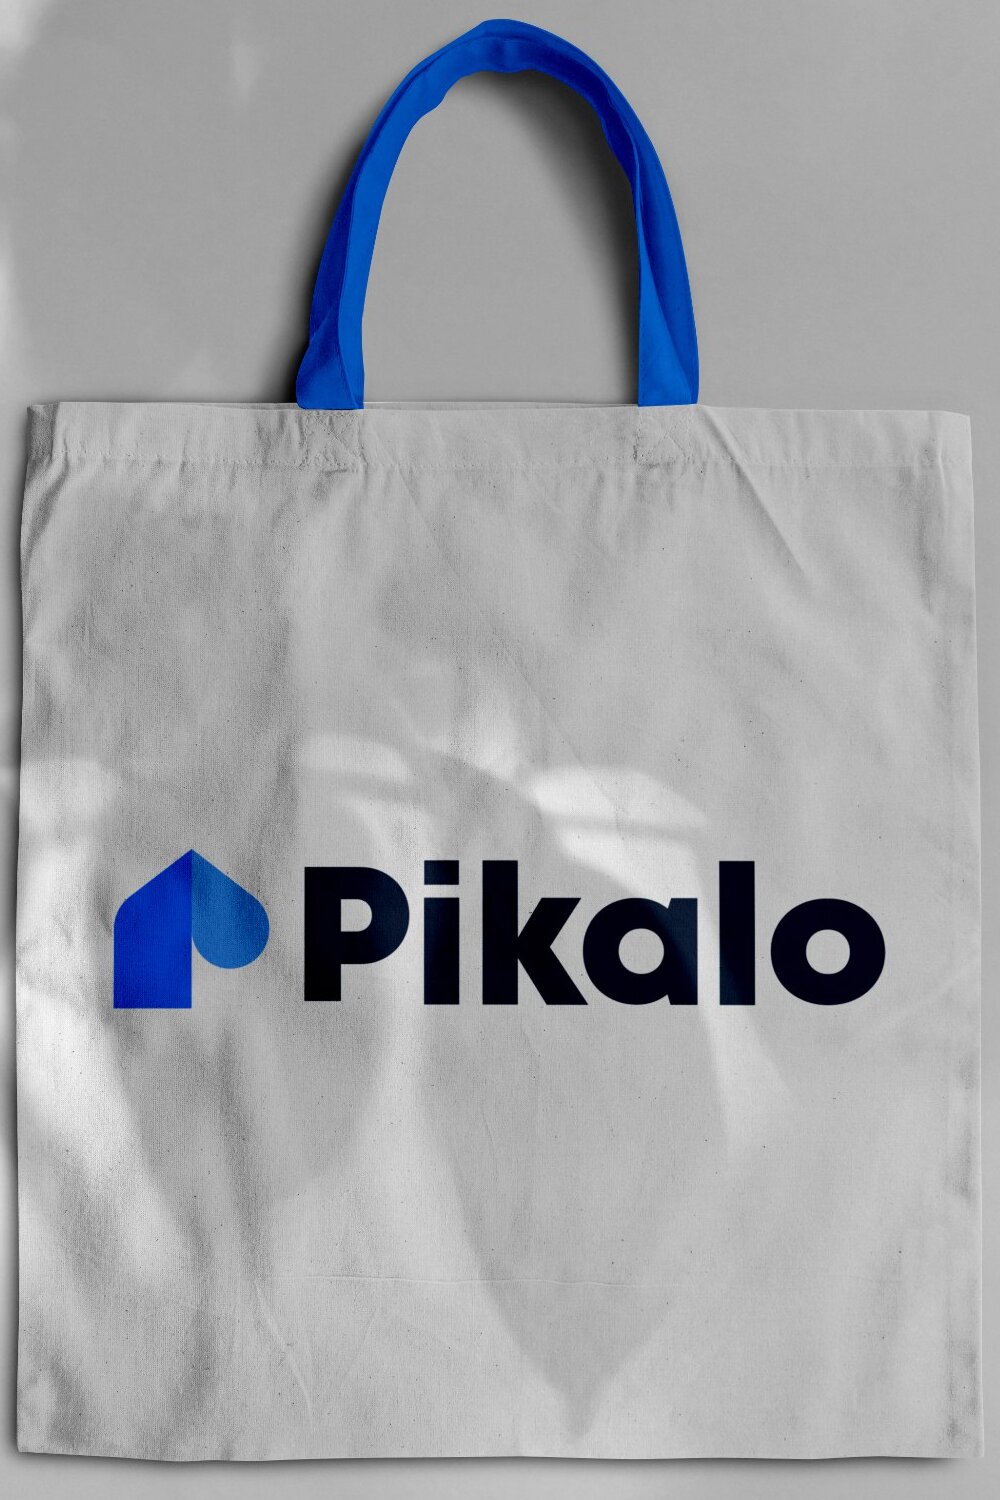 Pikalo Logo pinterest preview image.